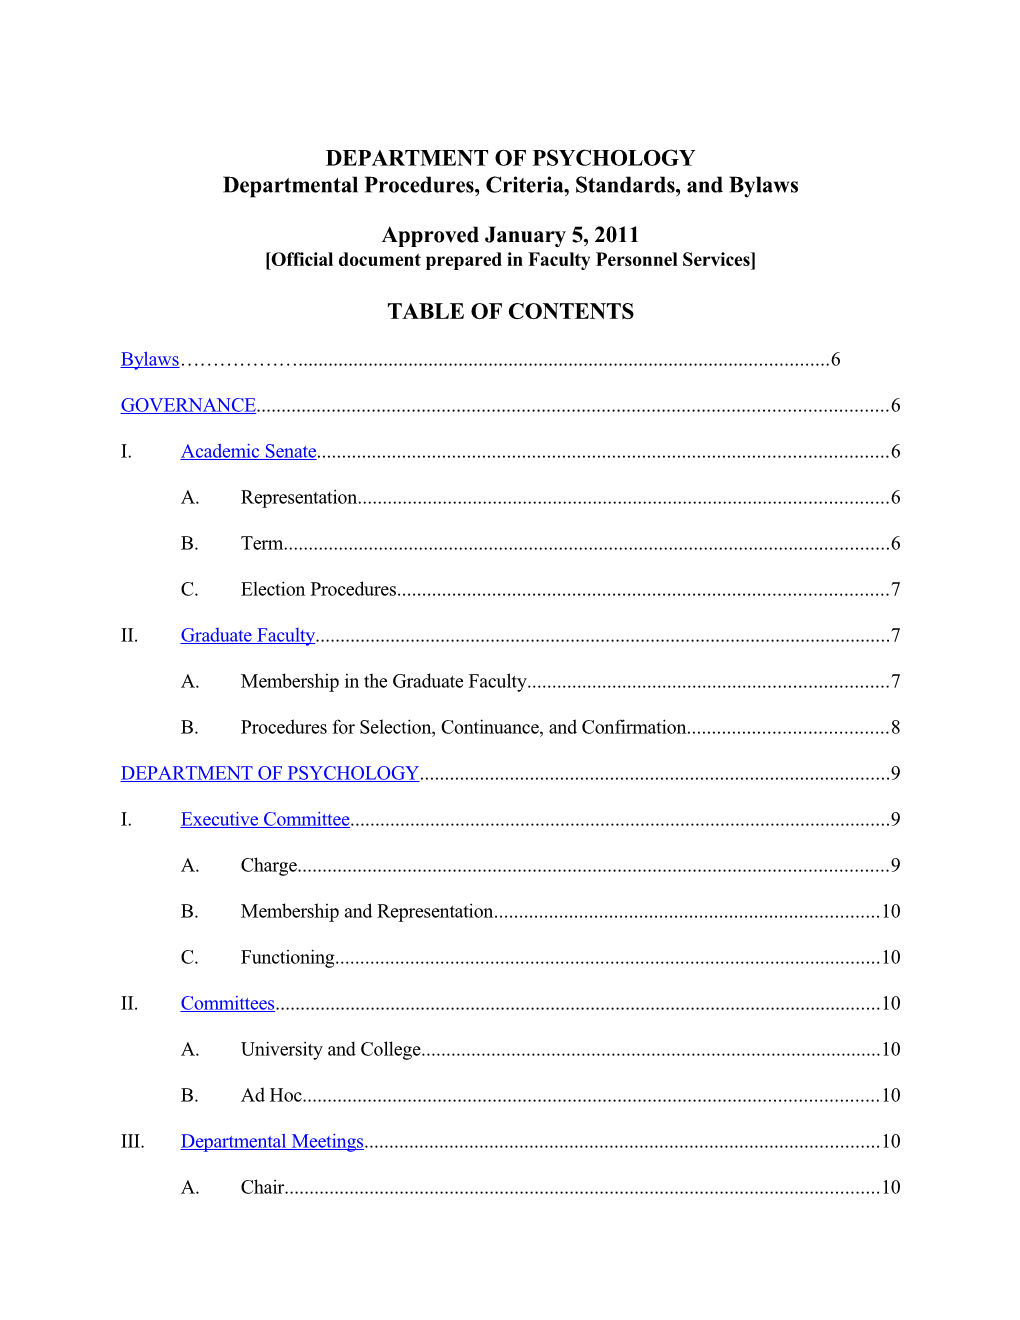 Departmental Procedures, Criteria, Standards, and Bylaws